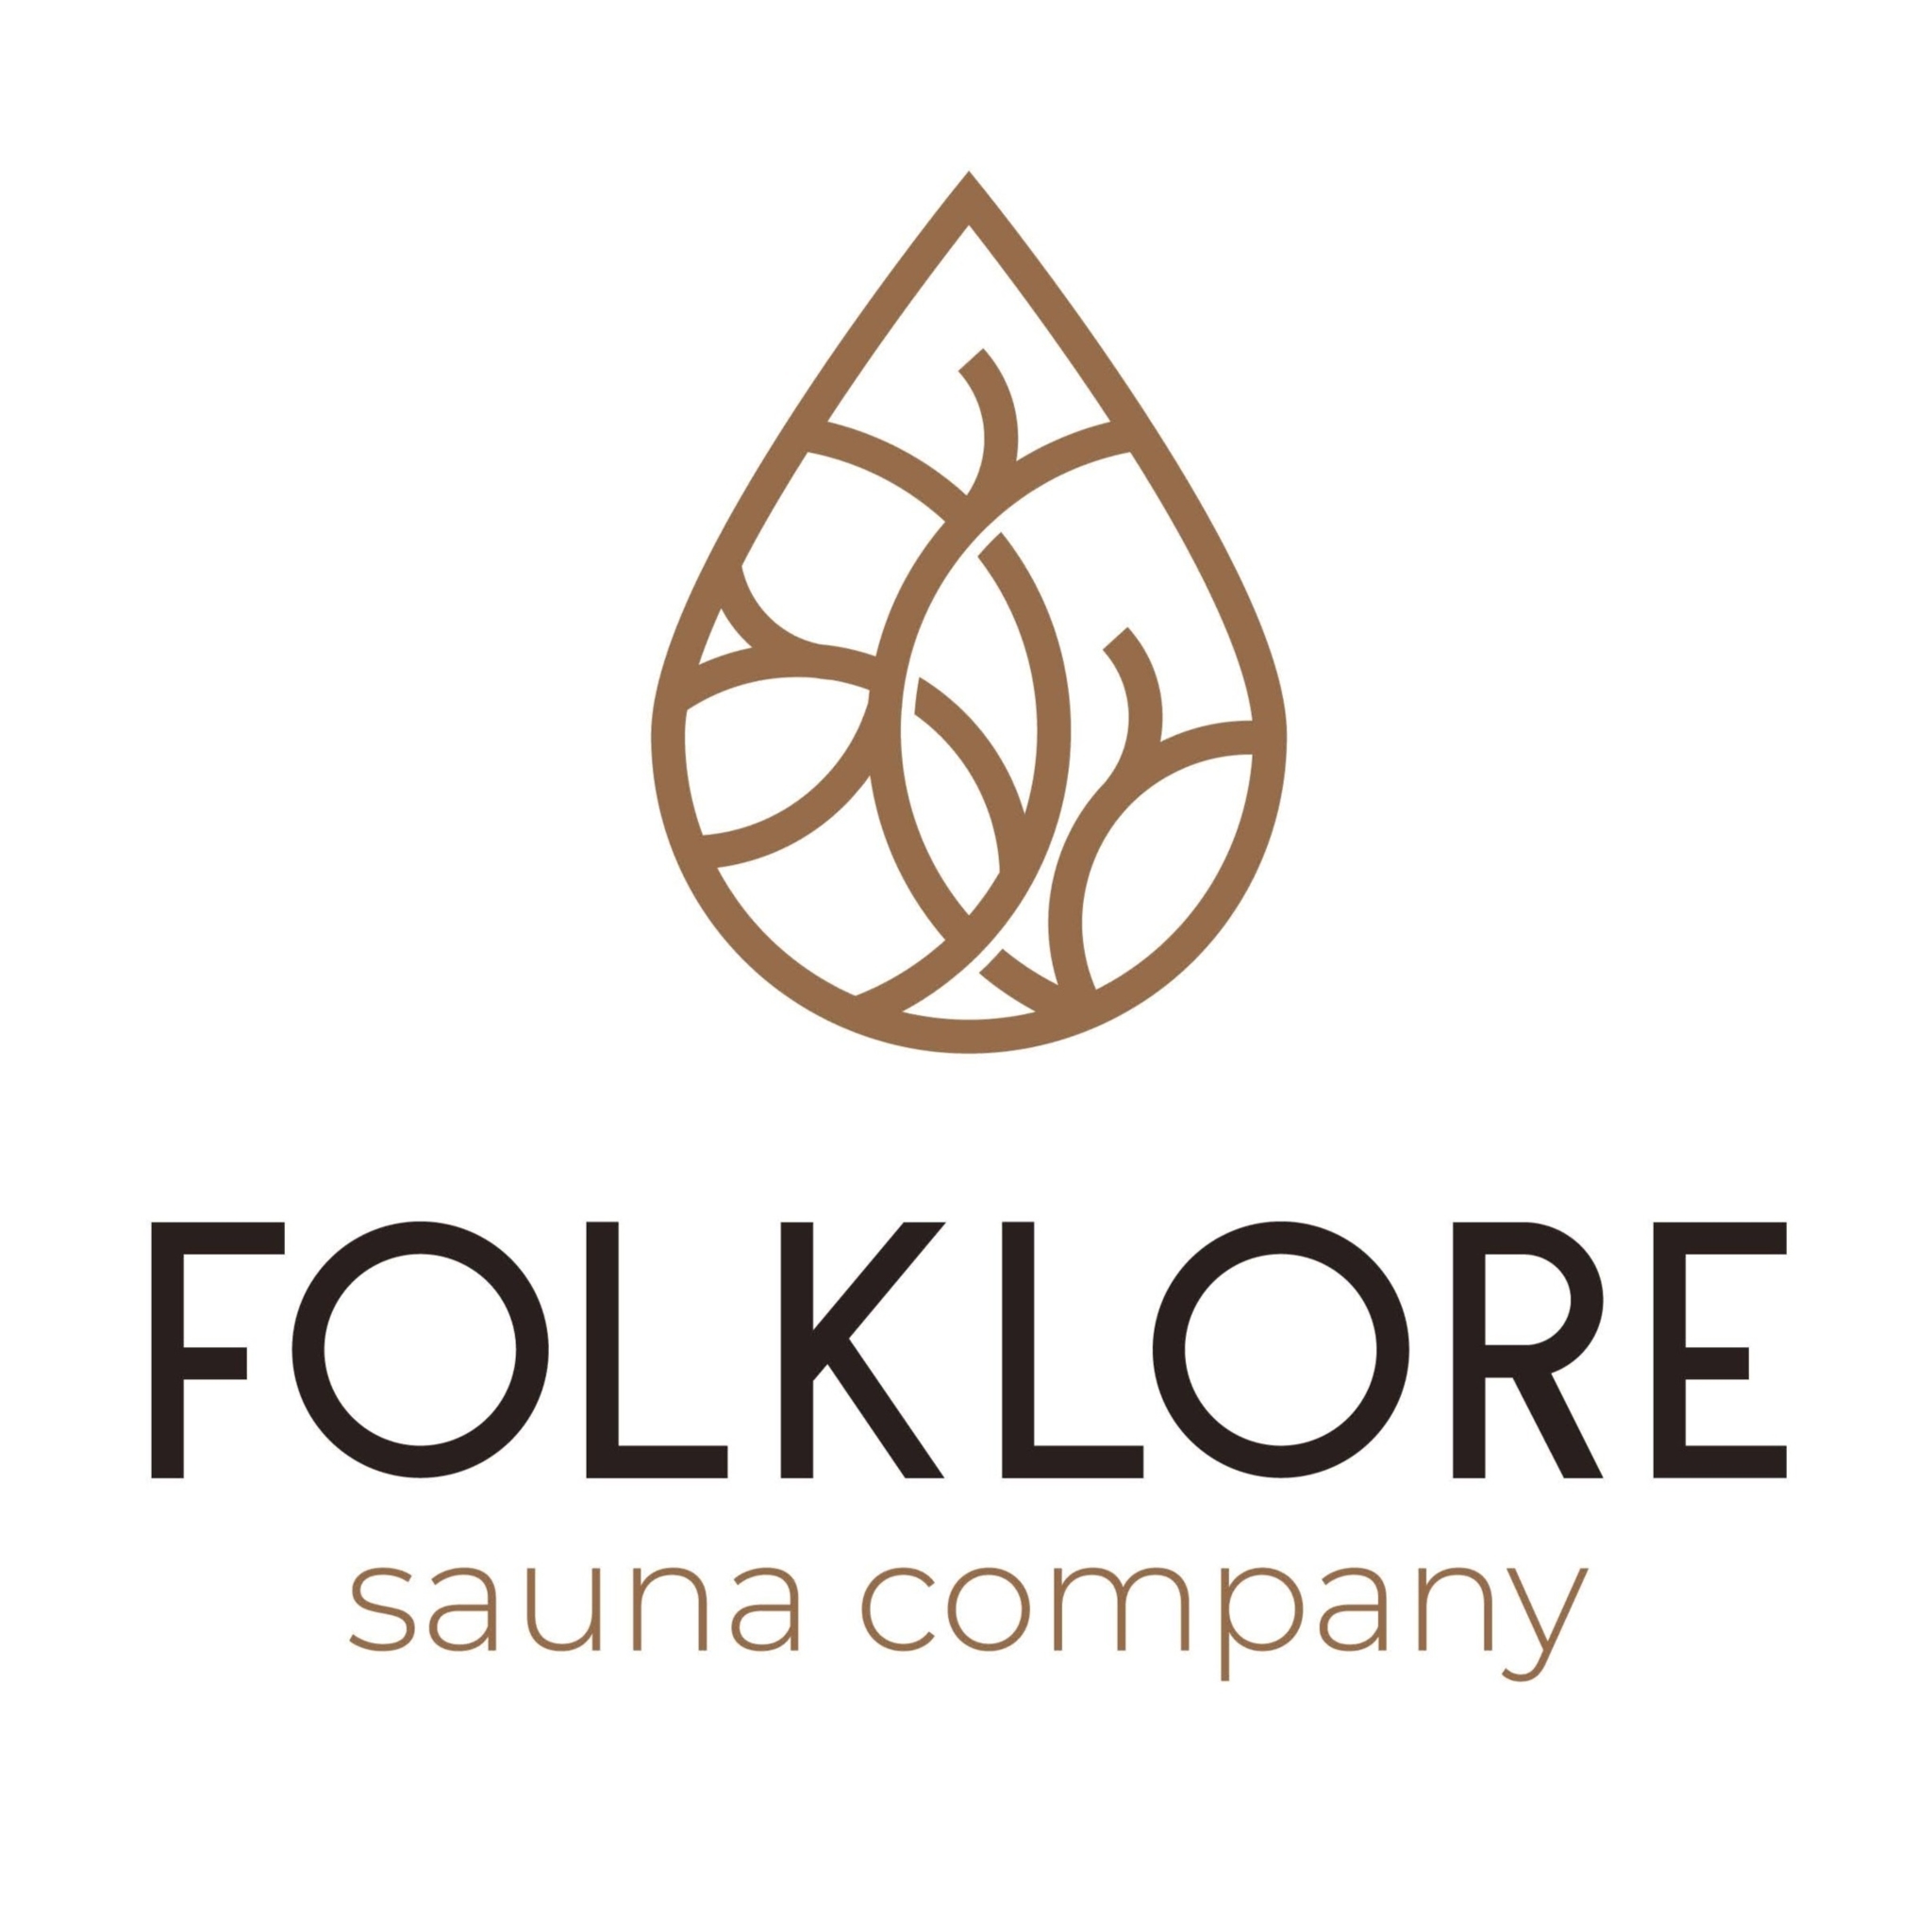 Folklore Sauna Company - Baths & Saunas: Relaxation